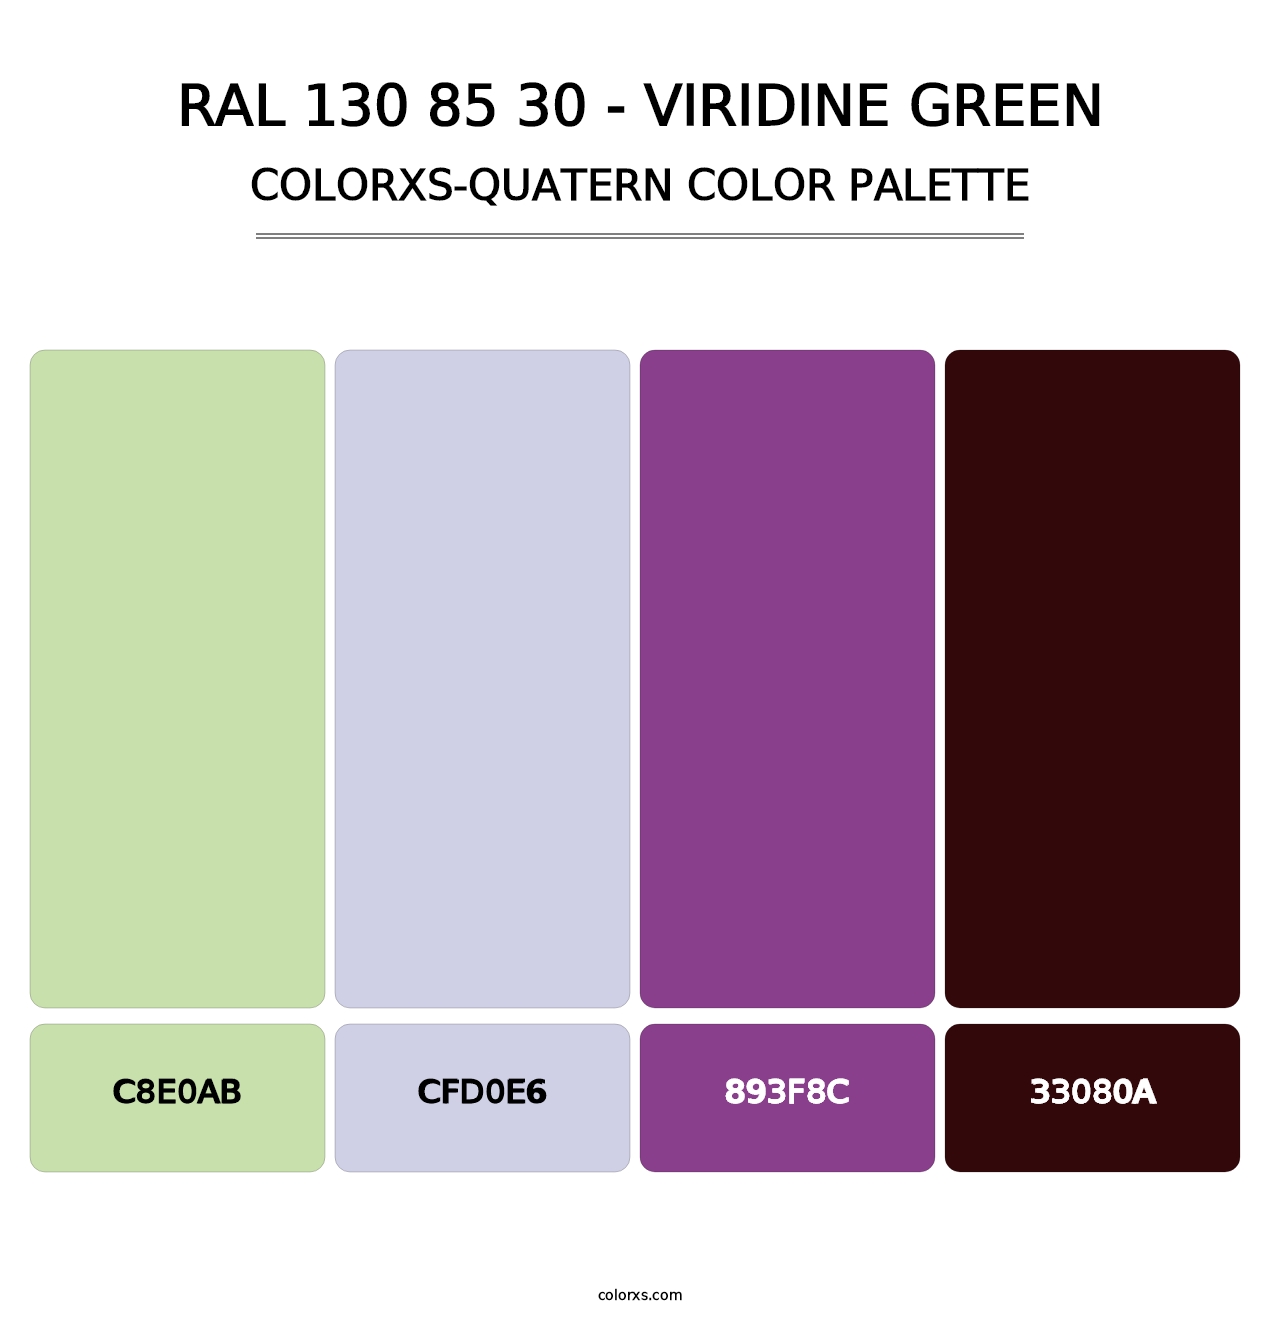 RAL 130 85 30 - Viridine Green - Colorxs Quatern Palette